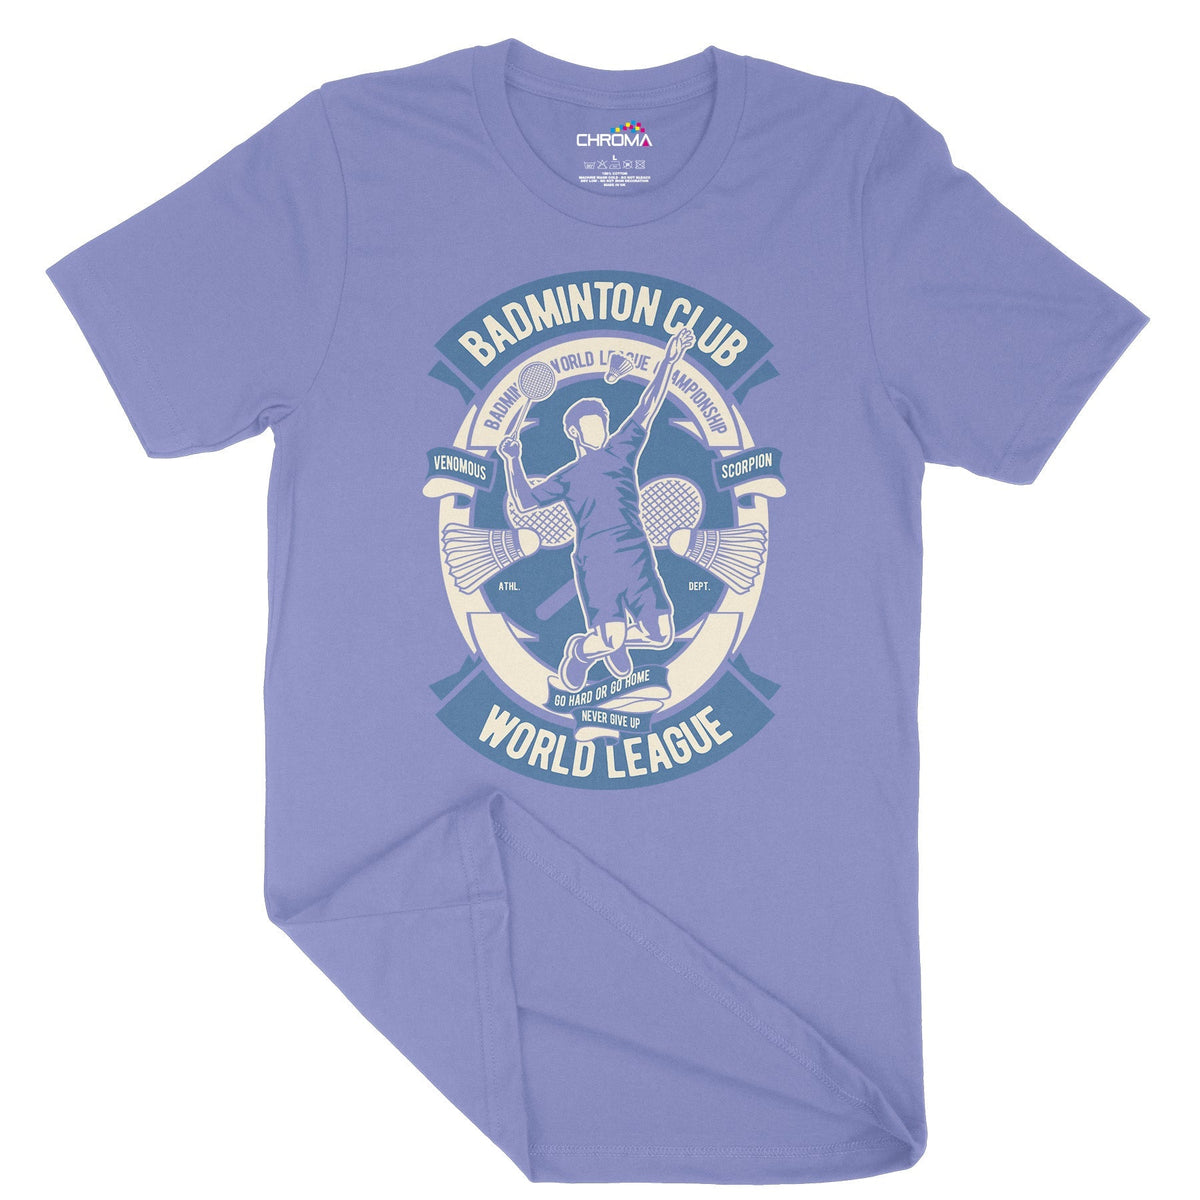 Badminton Club | Vintage Adult T-Shirt | Classic Vintage Clothing Chroma Clothing